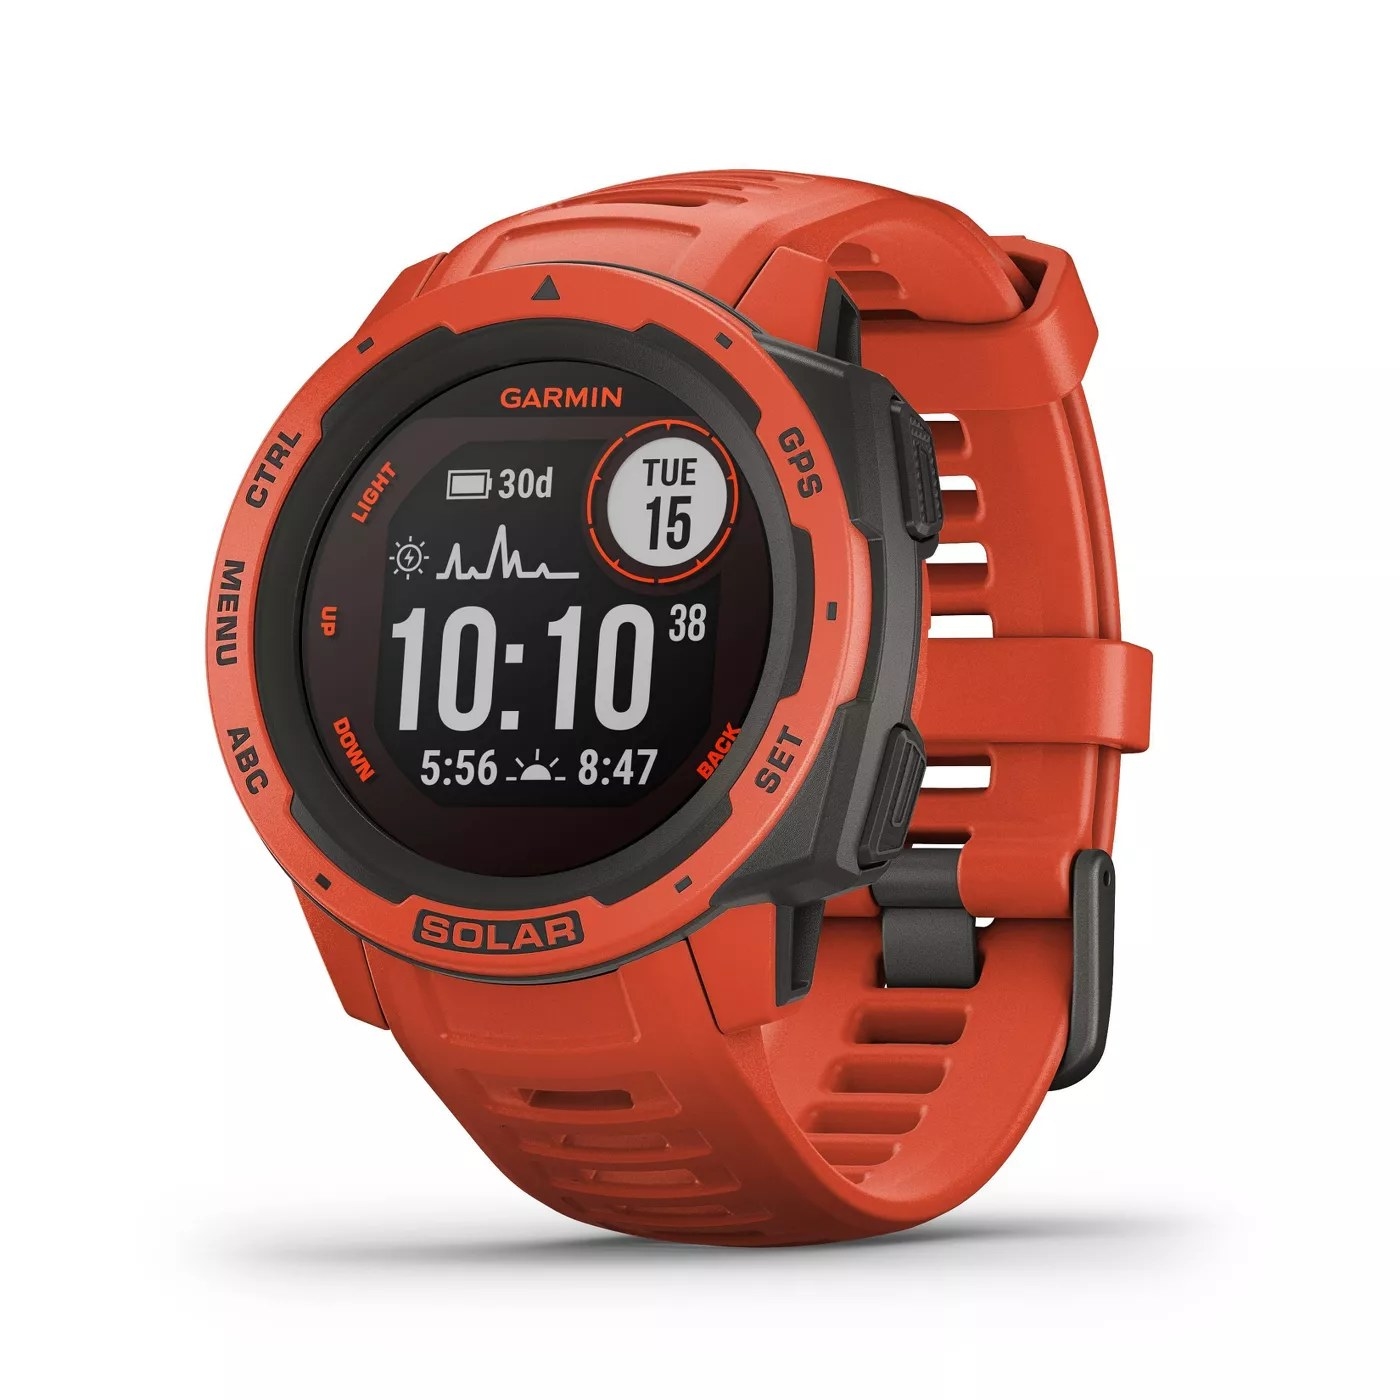 The orange smartwatch